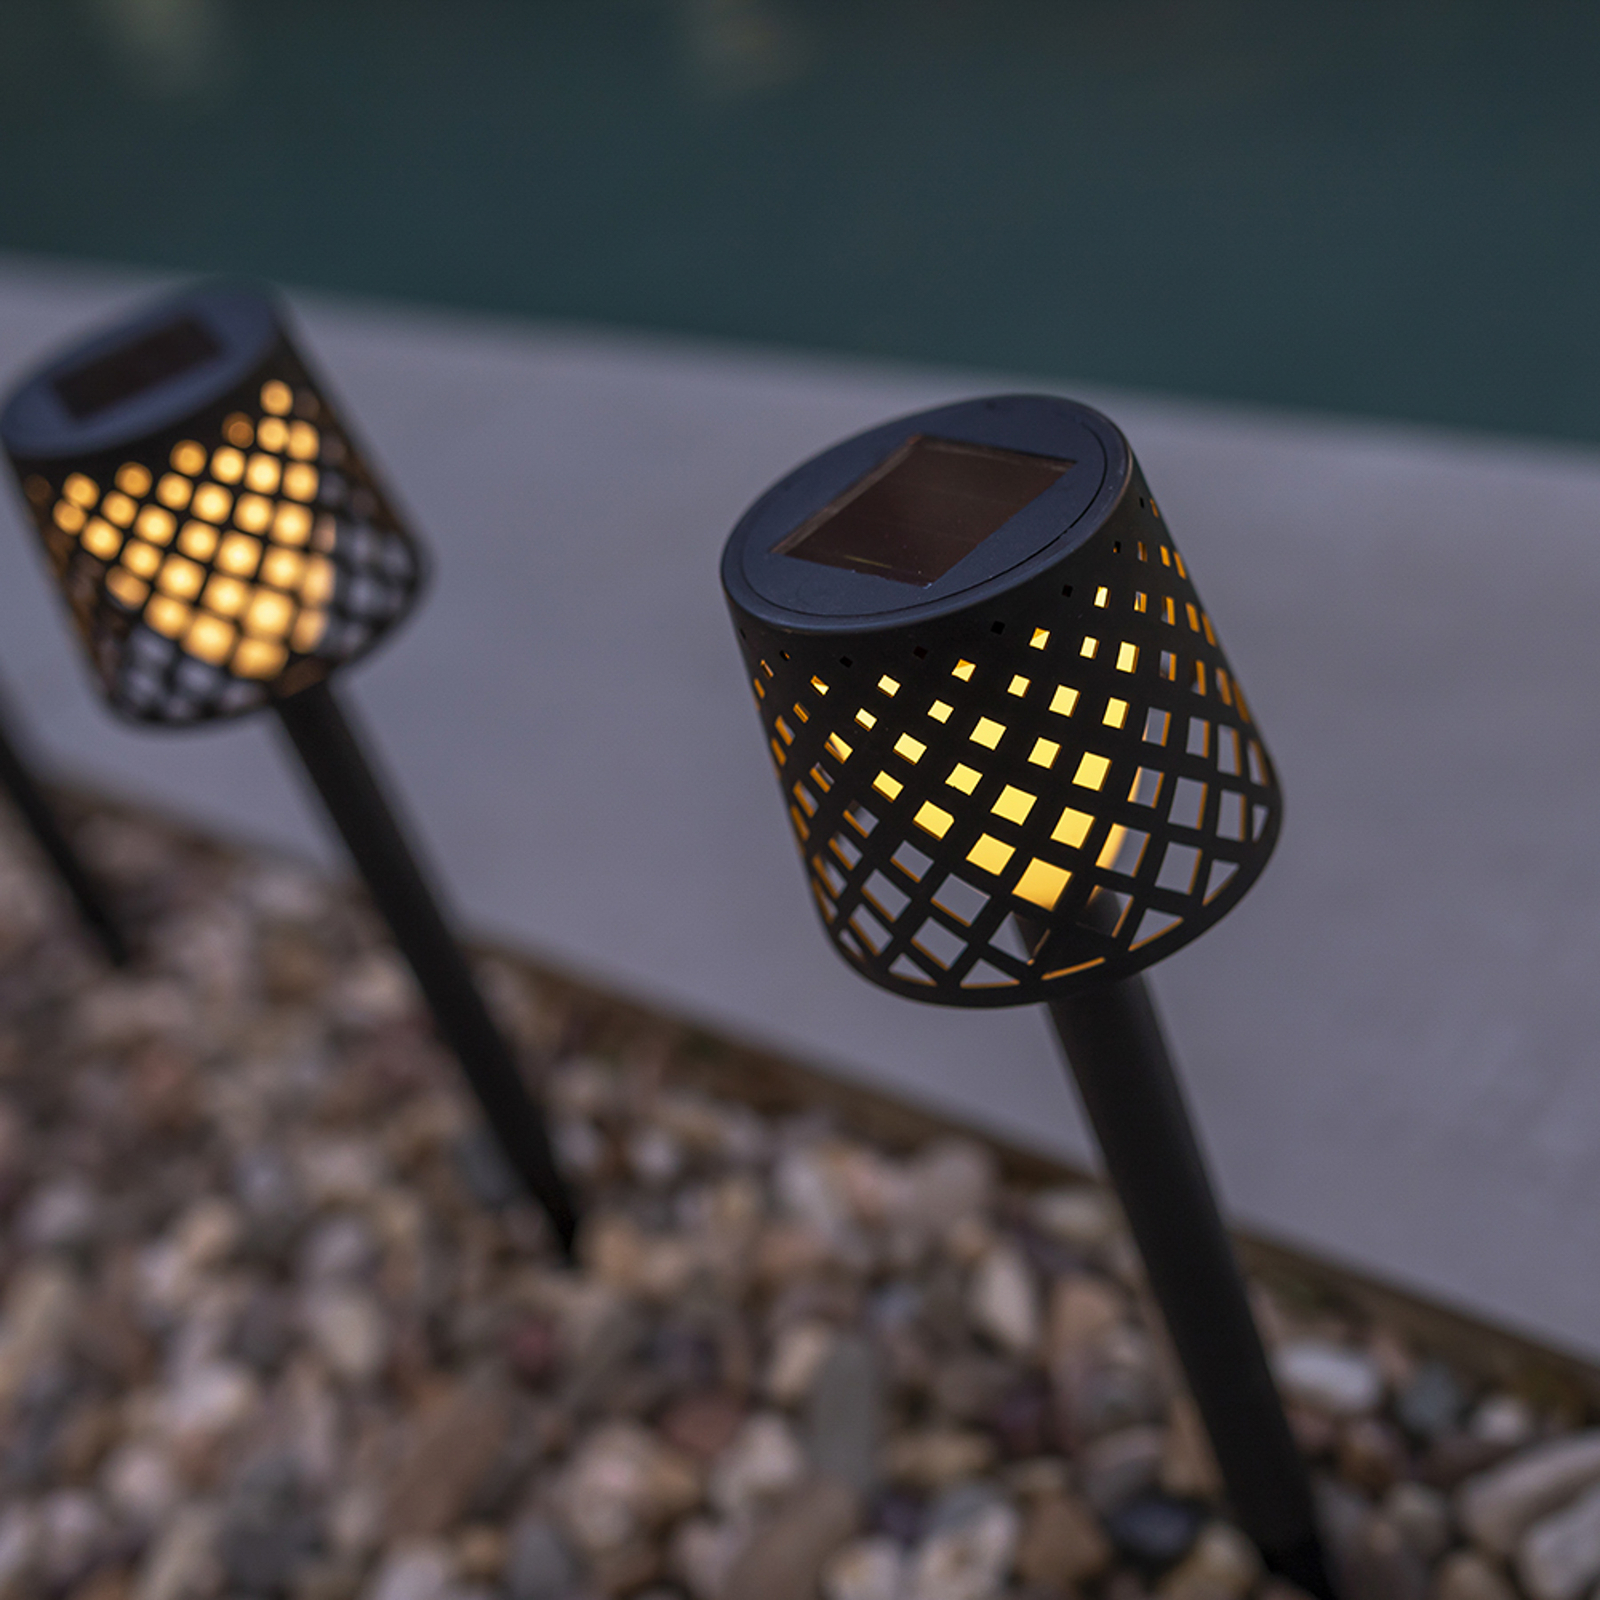 Newgarden Gretita LED-solcellslampa, svart